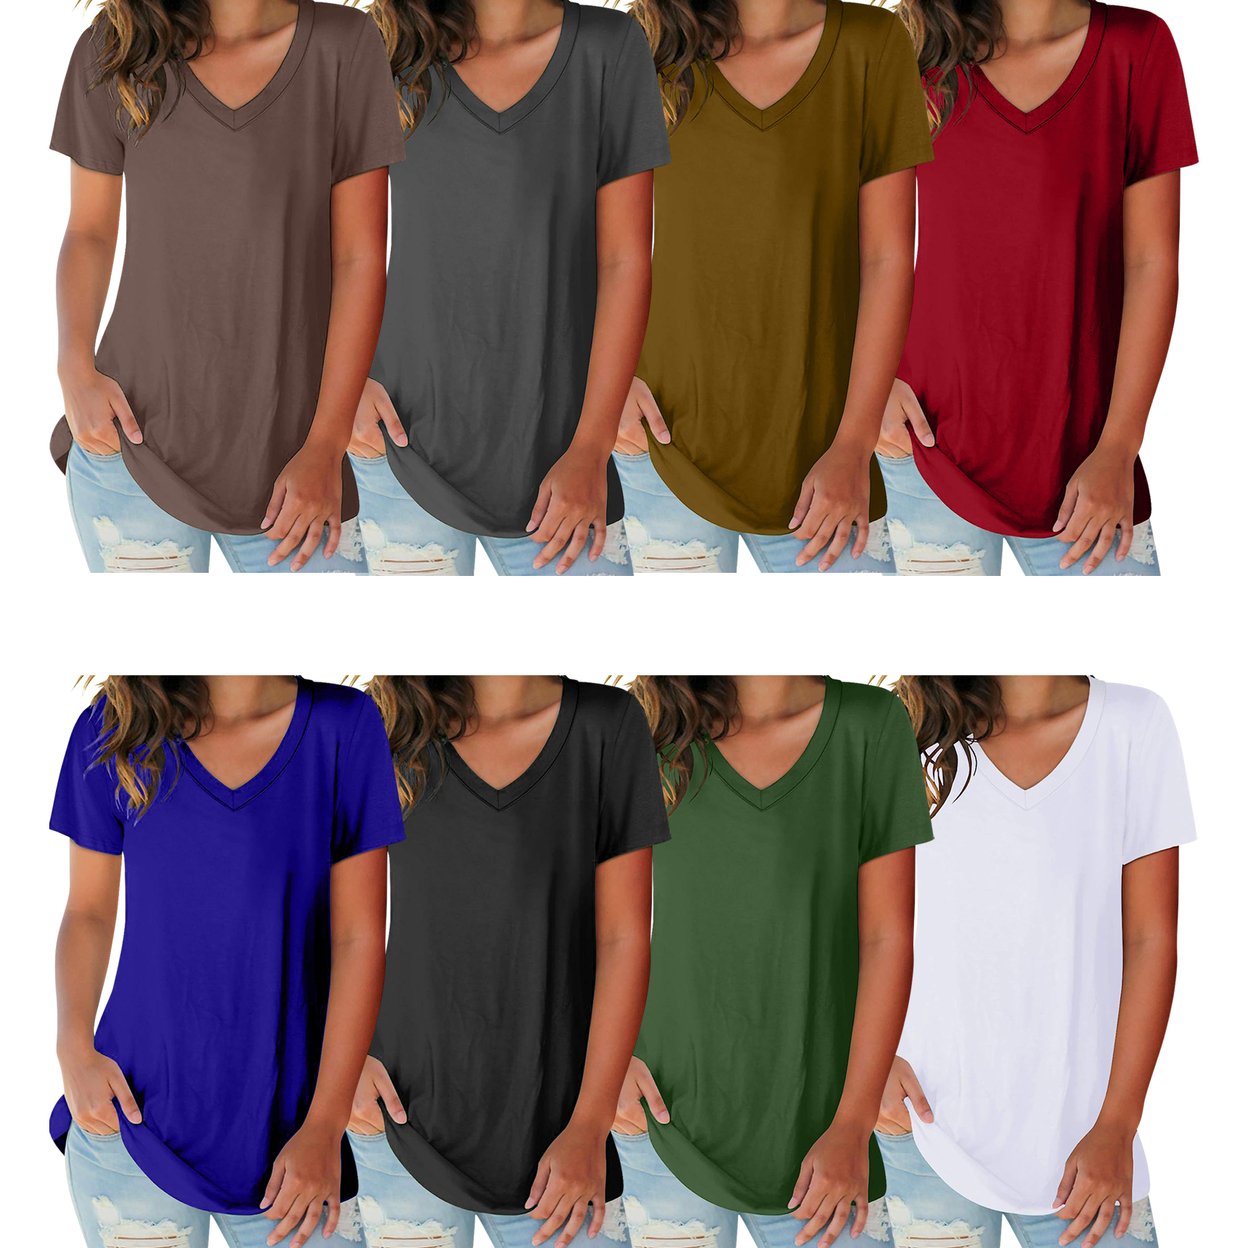 3-Pack: Women's Ultra Soft Smooth Cotton Blend Basic V-Neck Short Sleeve Shirts - Black, Navy, White, Large